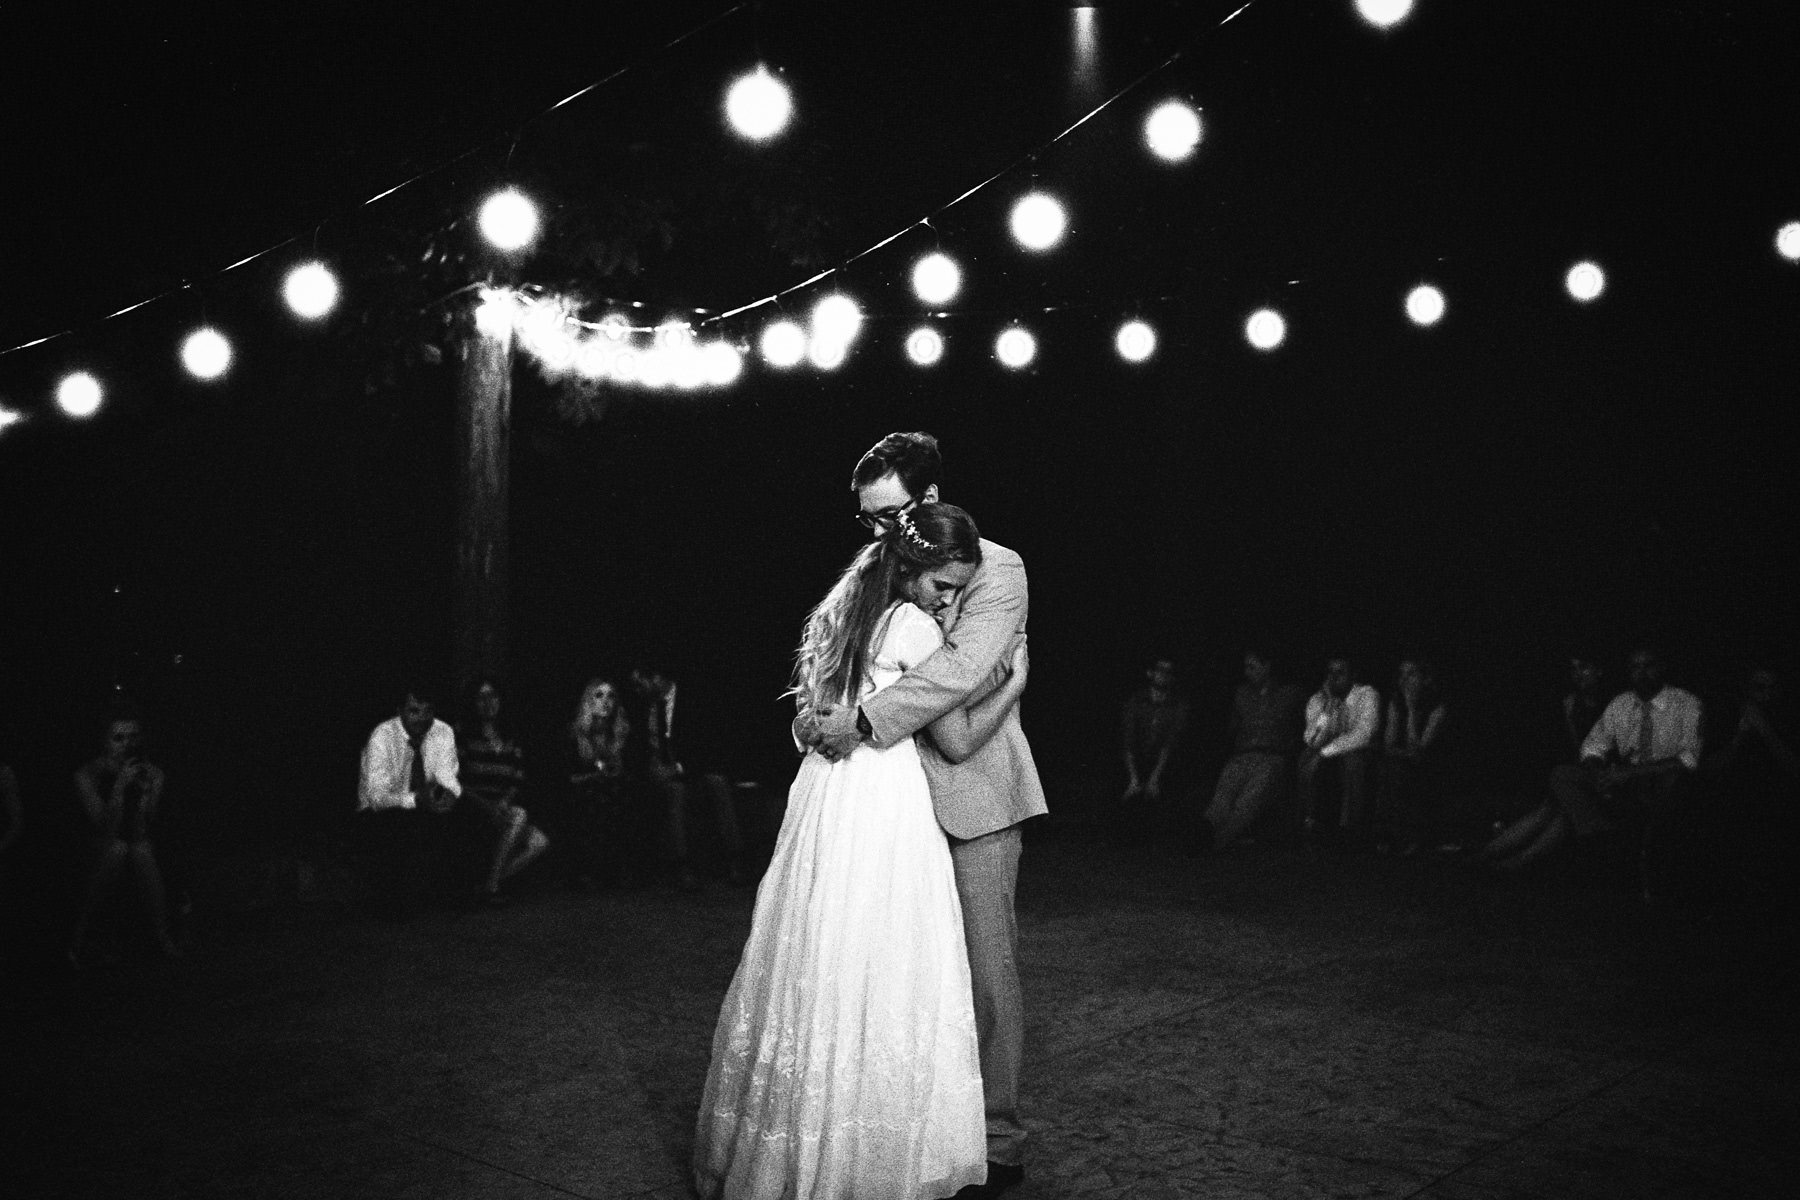 303_James P. Davis Hall Outdoor Wedding on 35mm Film Kansas City, Missouri_Kindling Wedding Photography.JPG